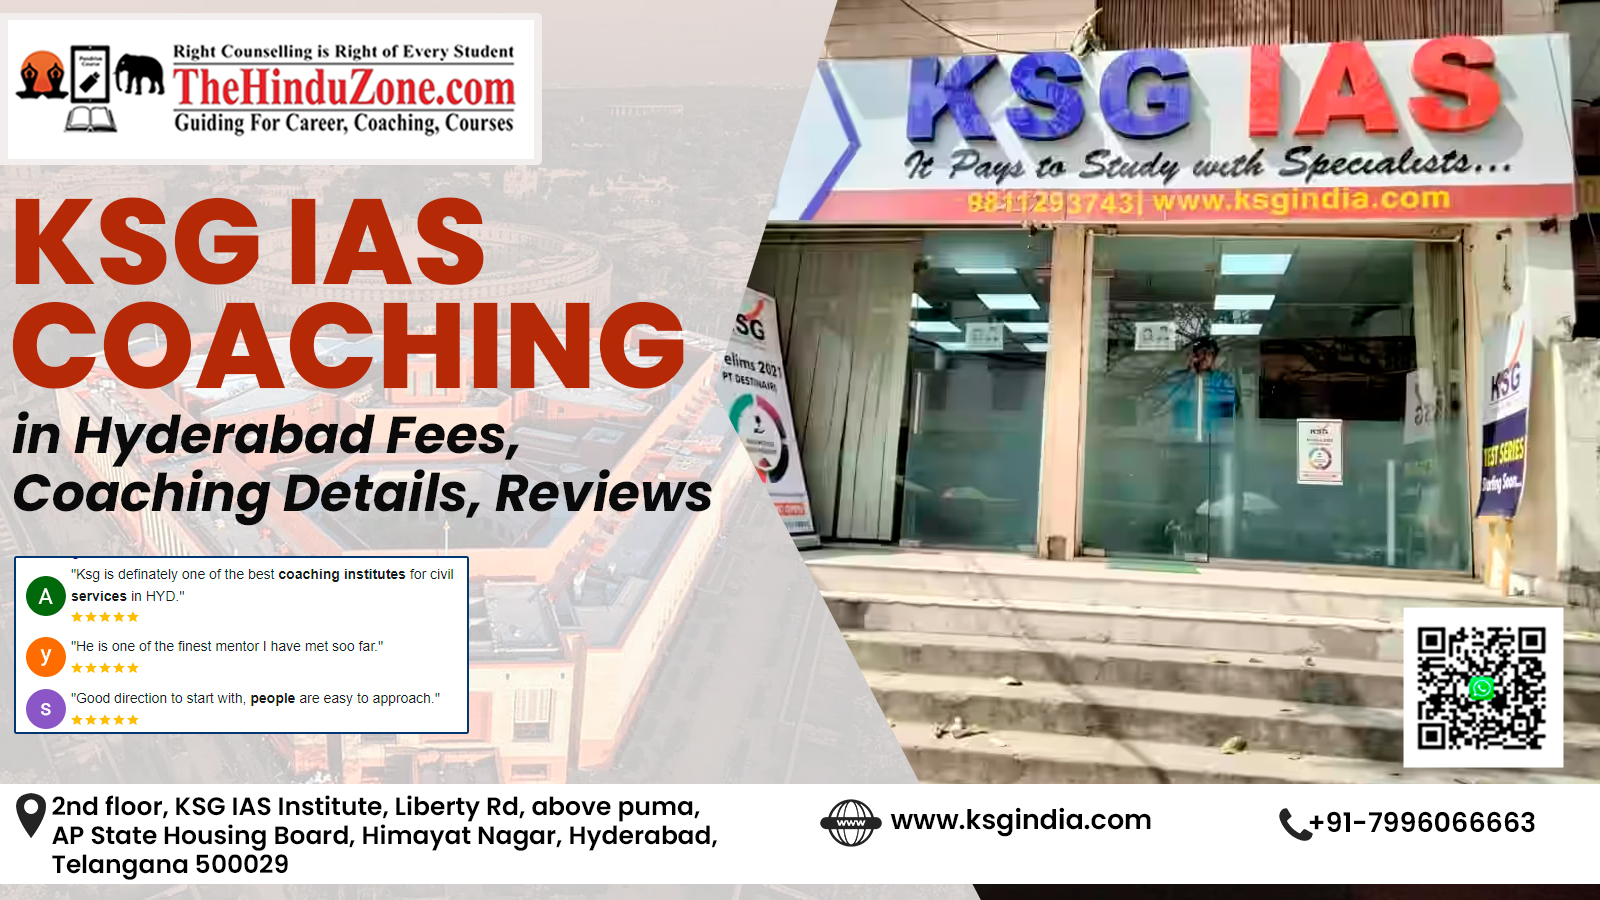 KSG IAS Coaching in Hyderabad Fees, Coaching Details, Reviews